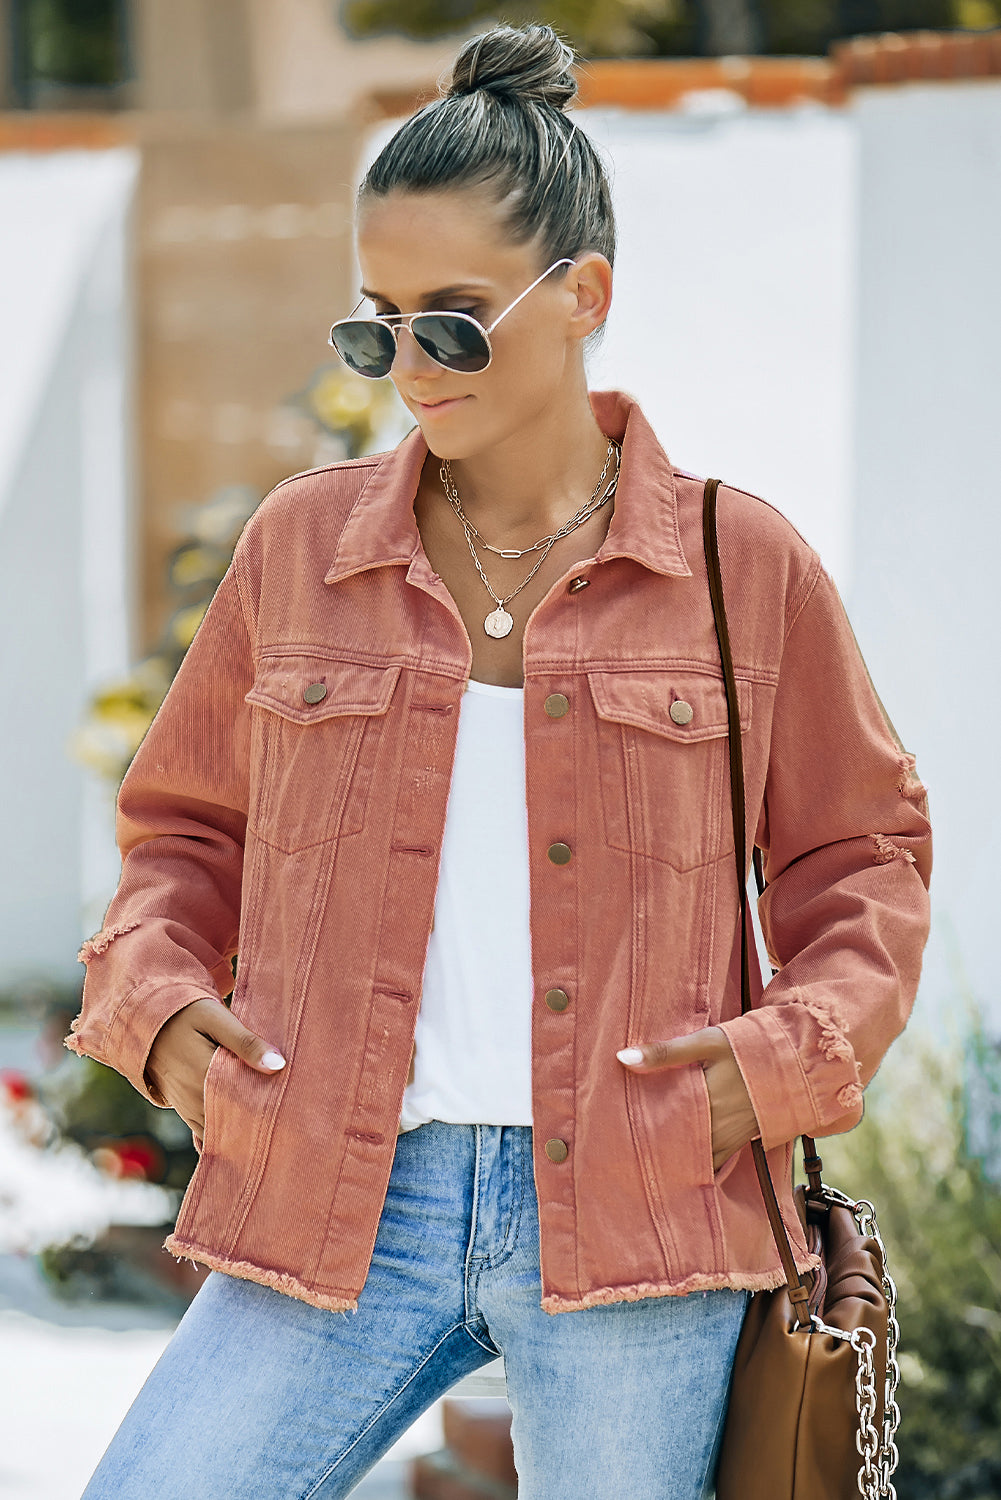 Teen Boys' New Fashionable Casual Light Pink Distressed Denim Jacket |  SHEIN USA